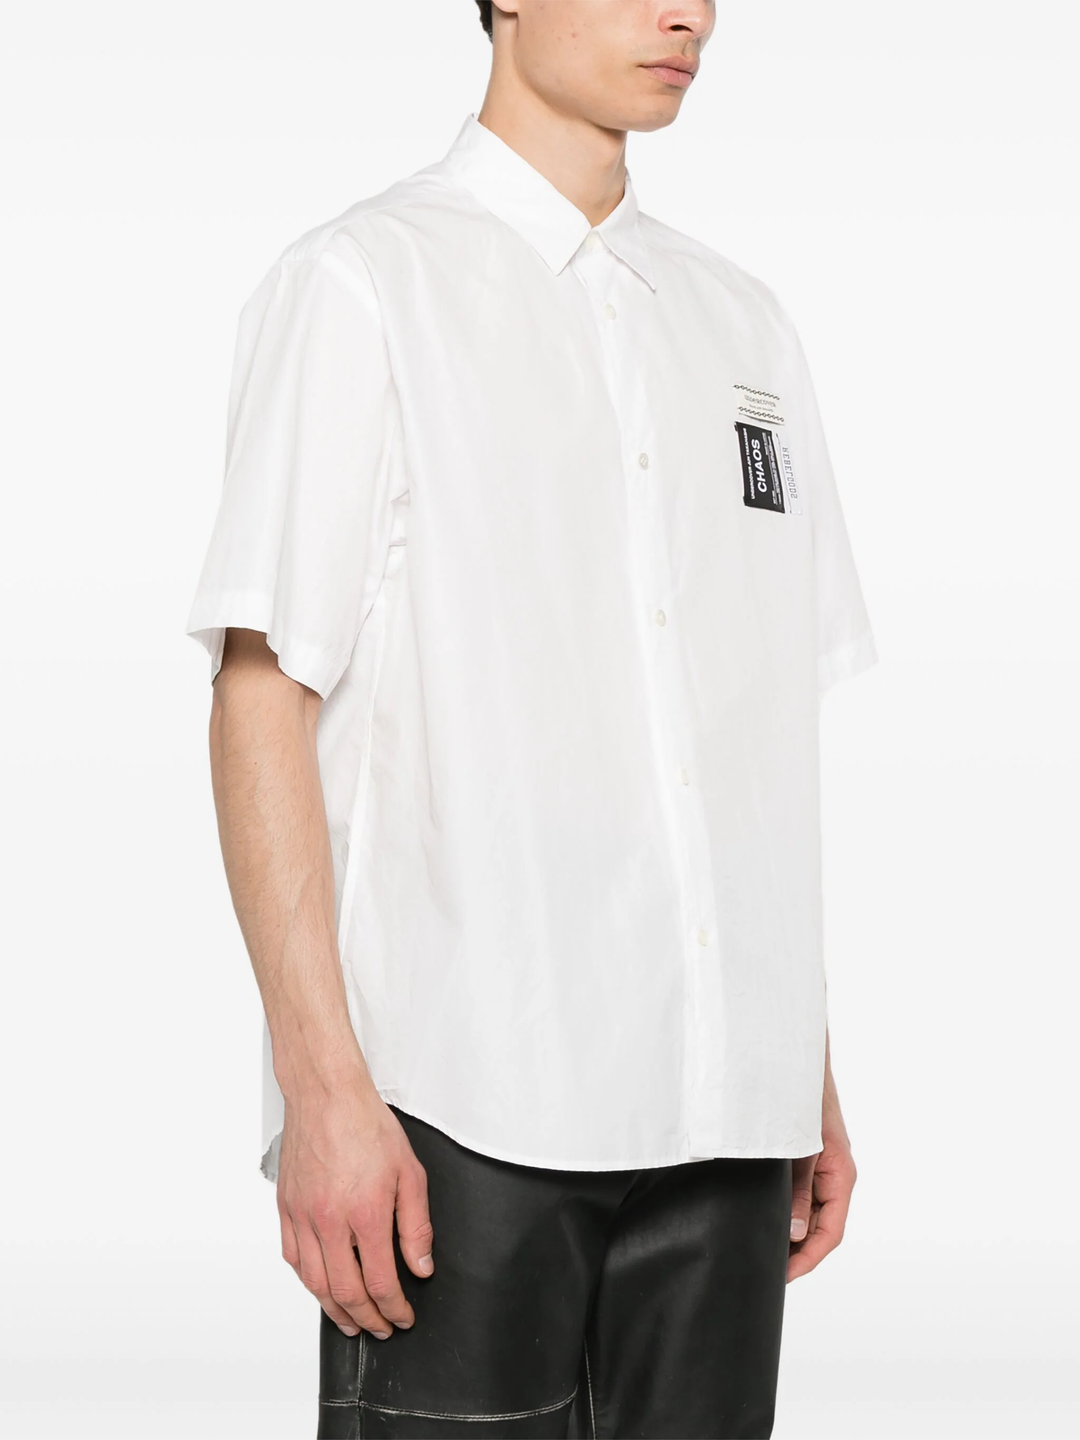 White Shirt Blouse